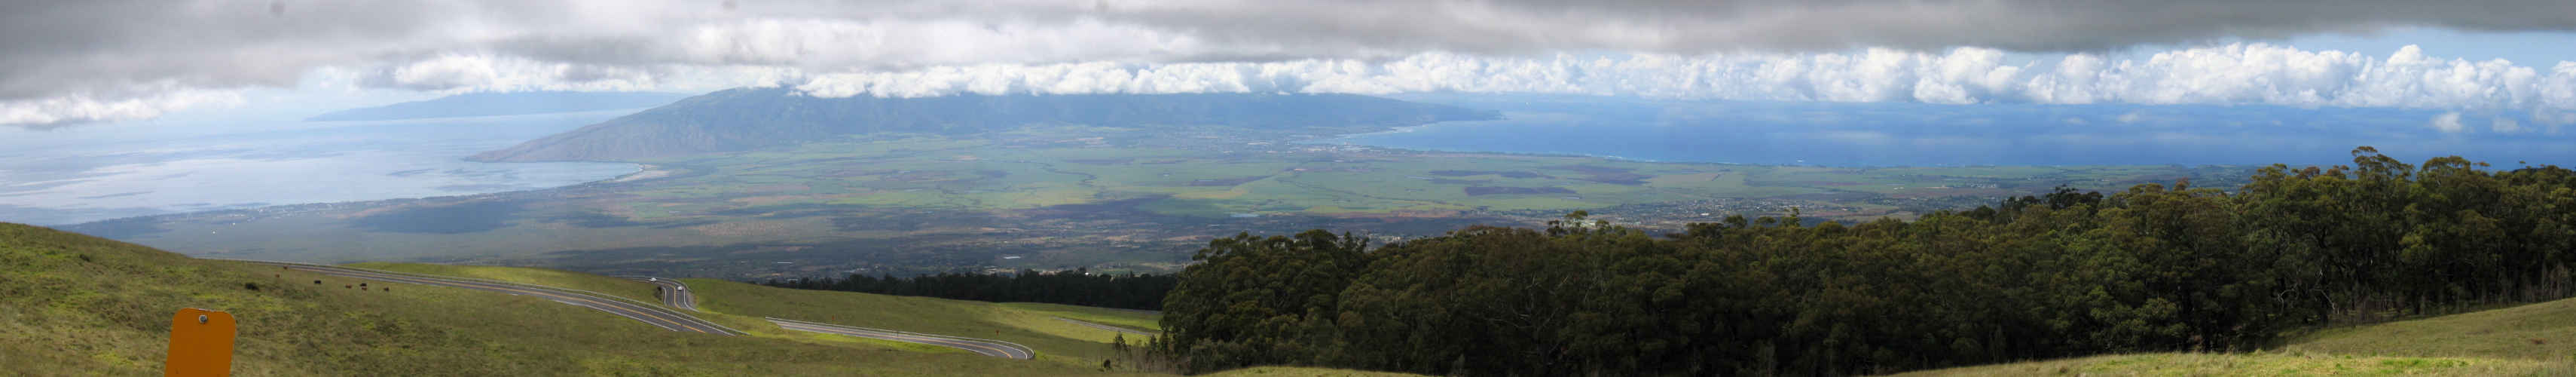 Panorama of west Maui from halfway up the slope of Haleakala.